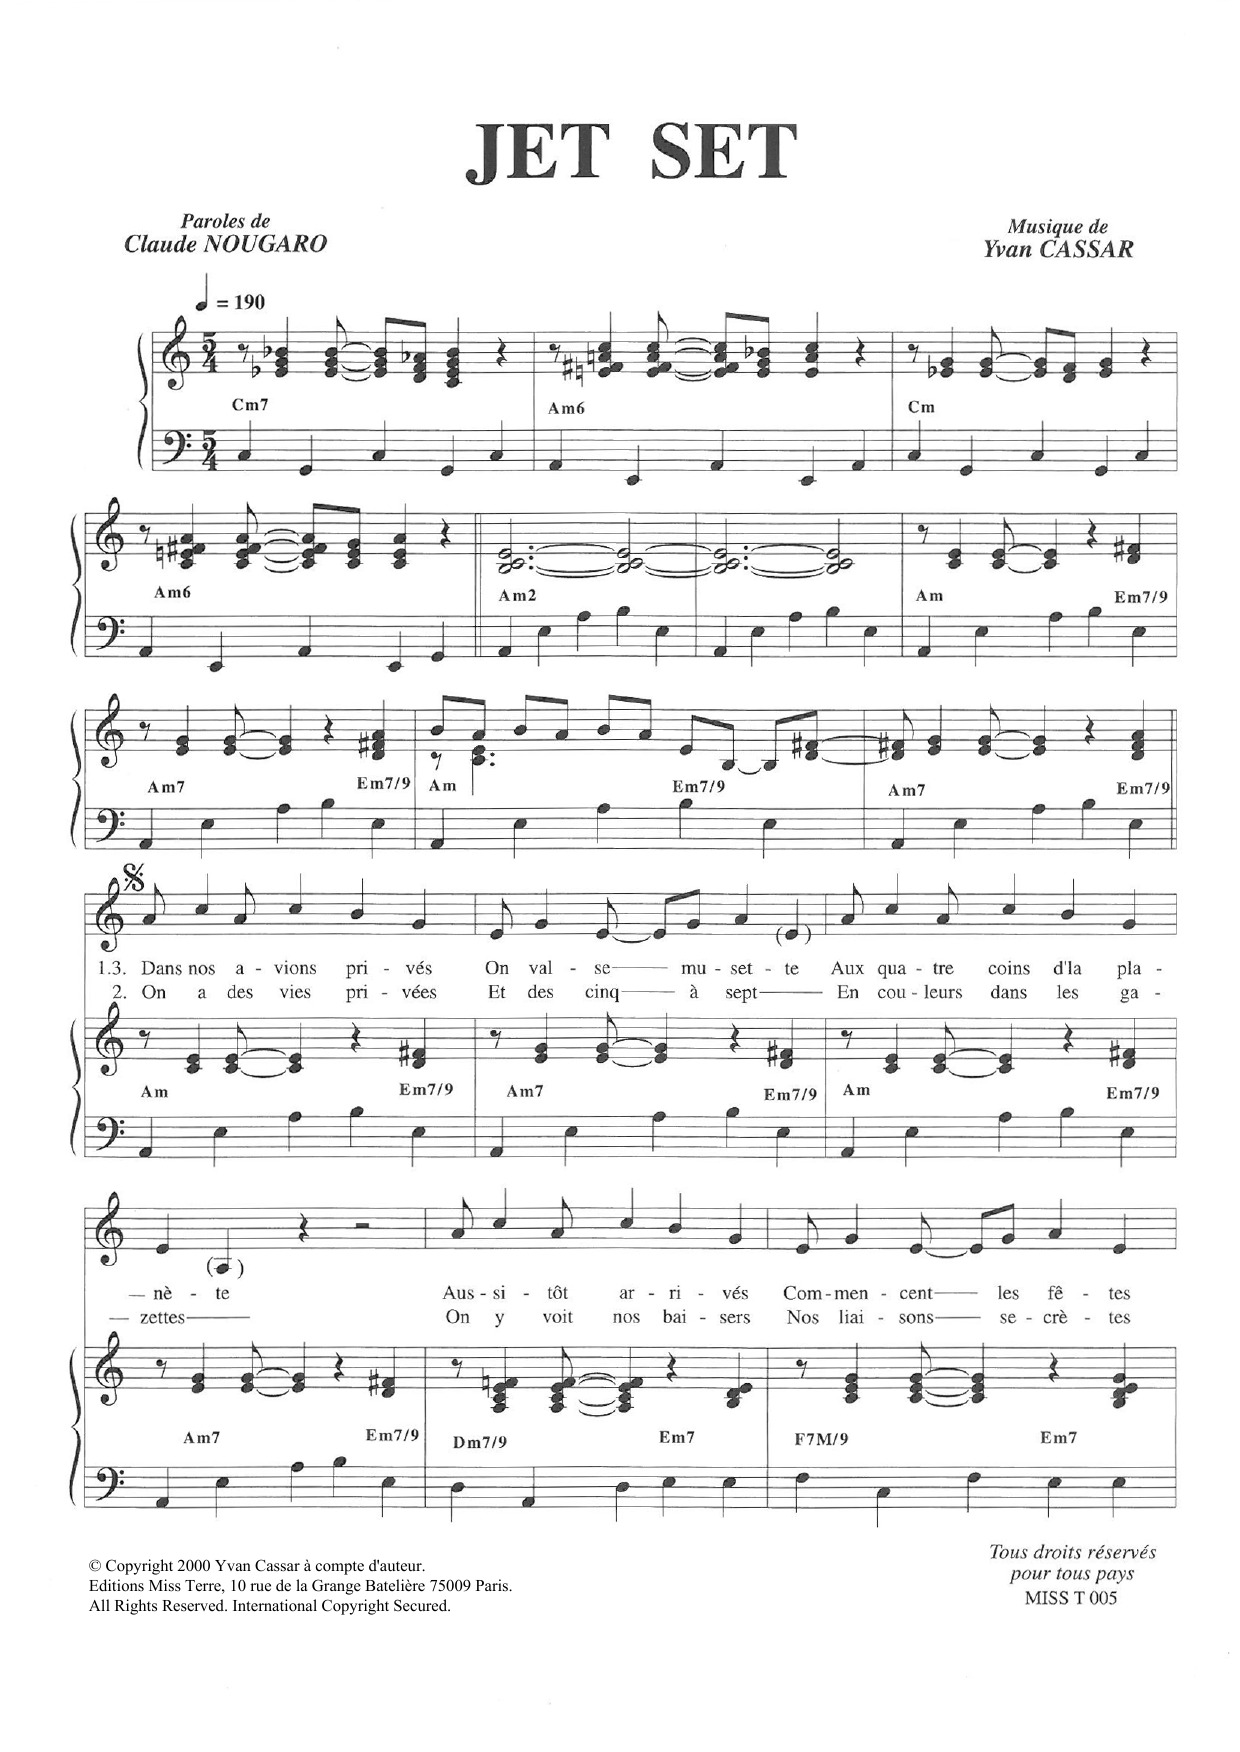 Claude Nougaro Jet Set Sheet Music Notes & Chords for Piano & Vocal - Download or Print PDF